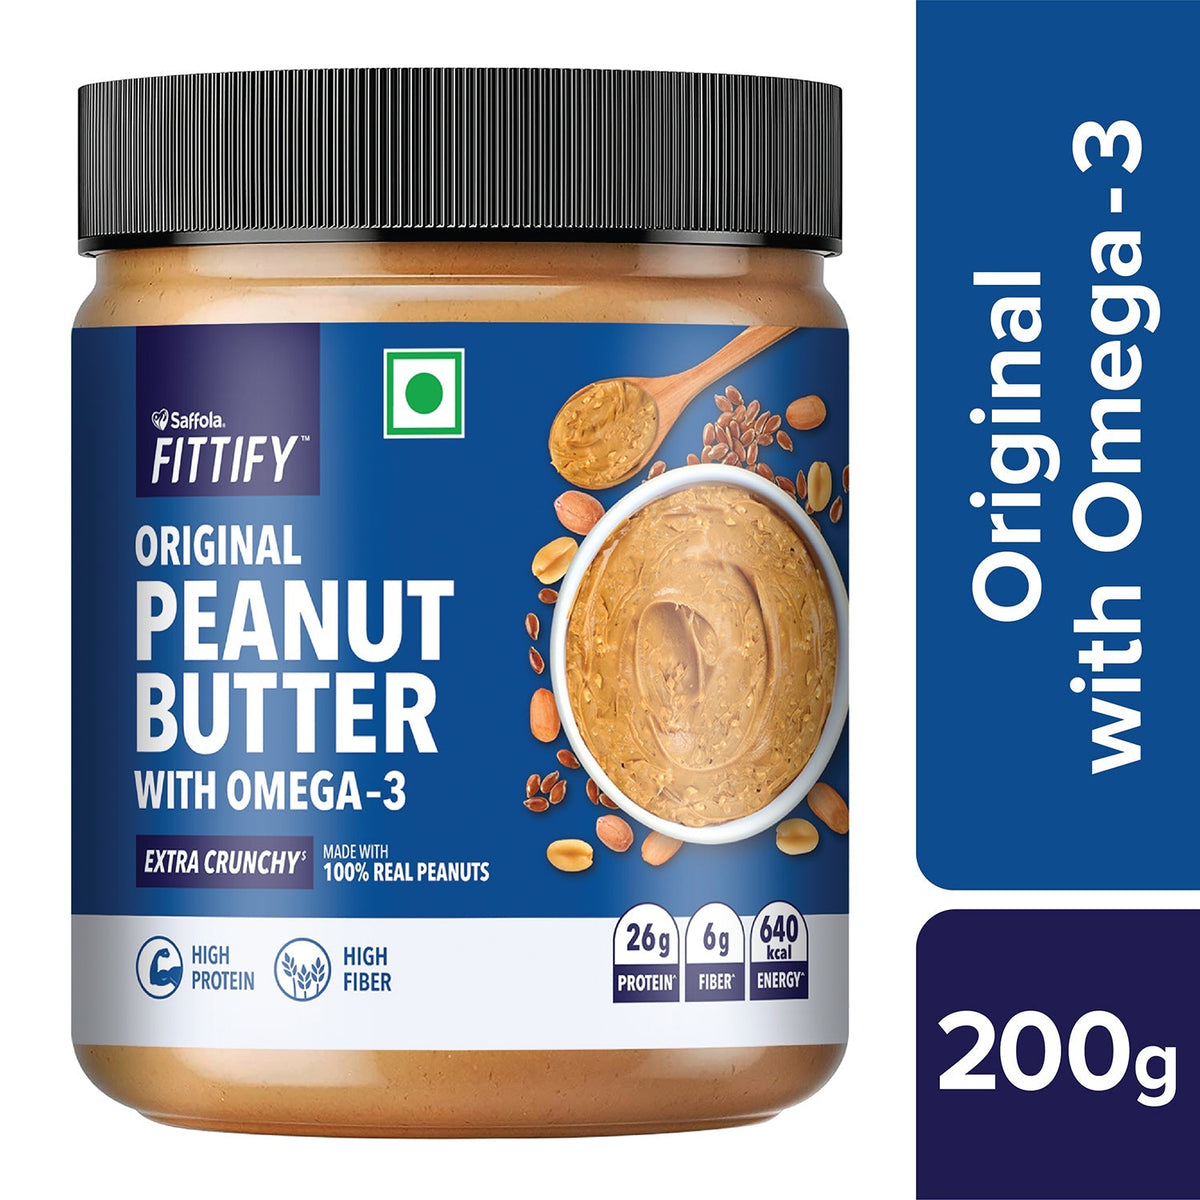 [CRED] Saffola Fittify Original - Omega 3 - Peanut Butter